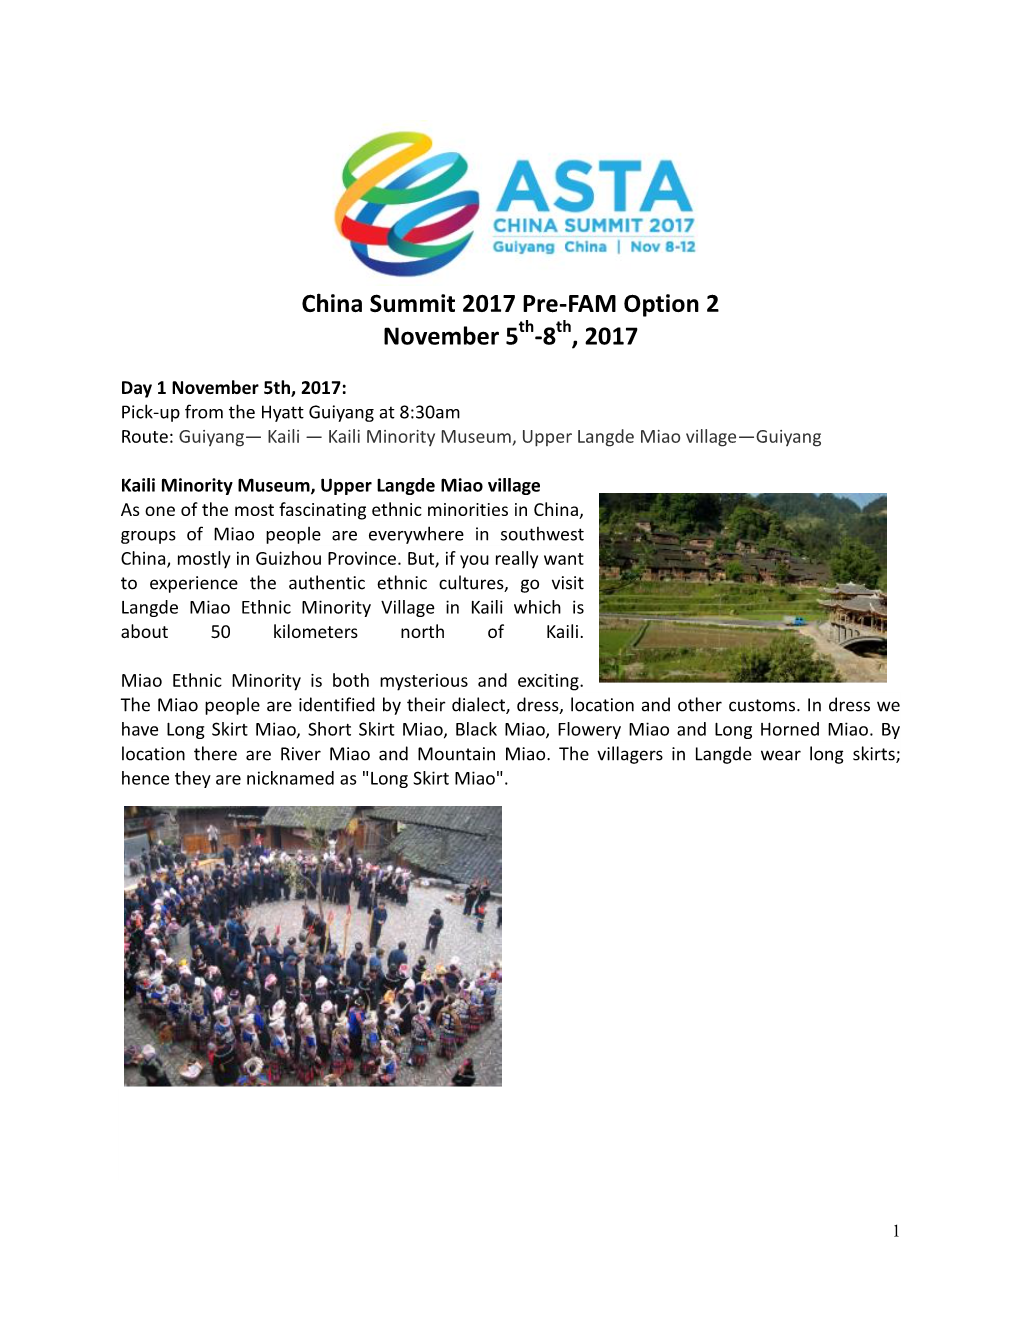 ASTA China Summit 2017 Prefam Option 2